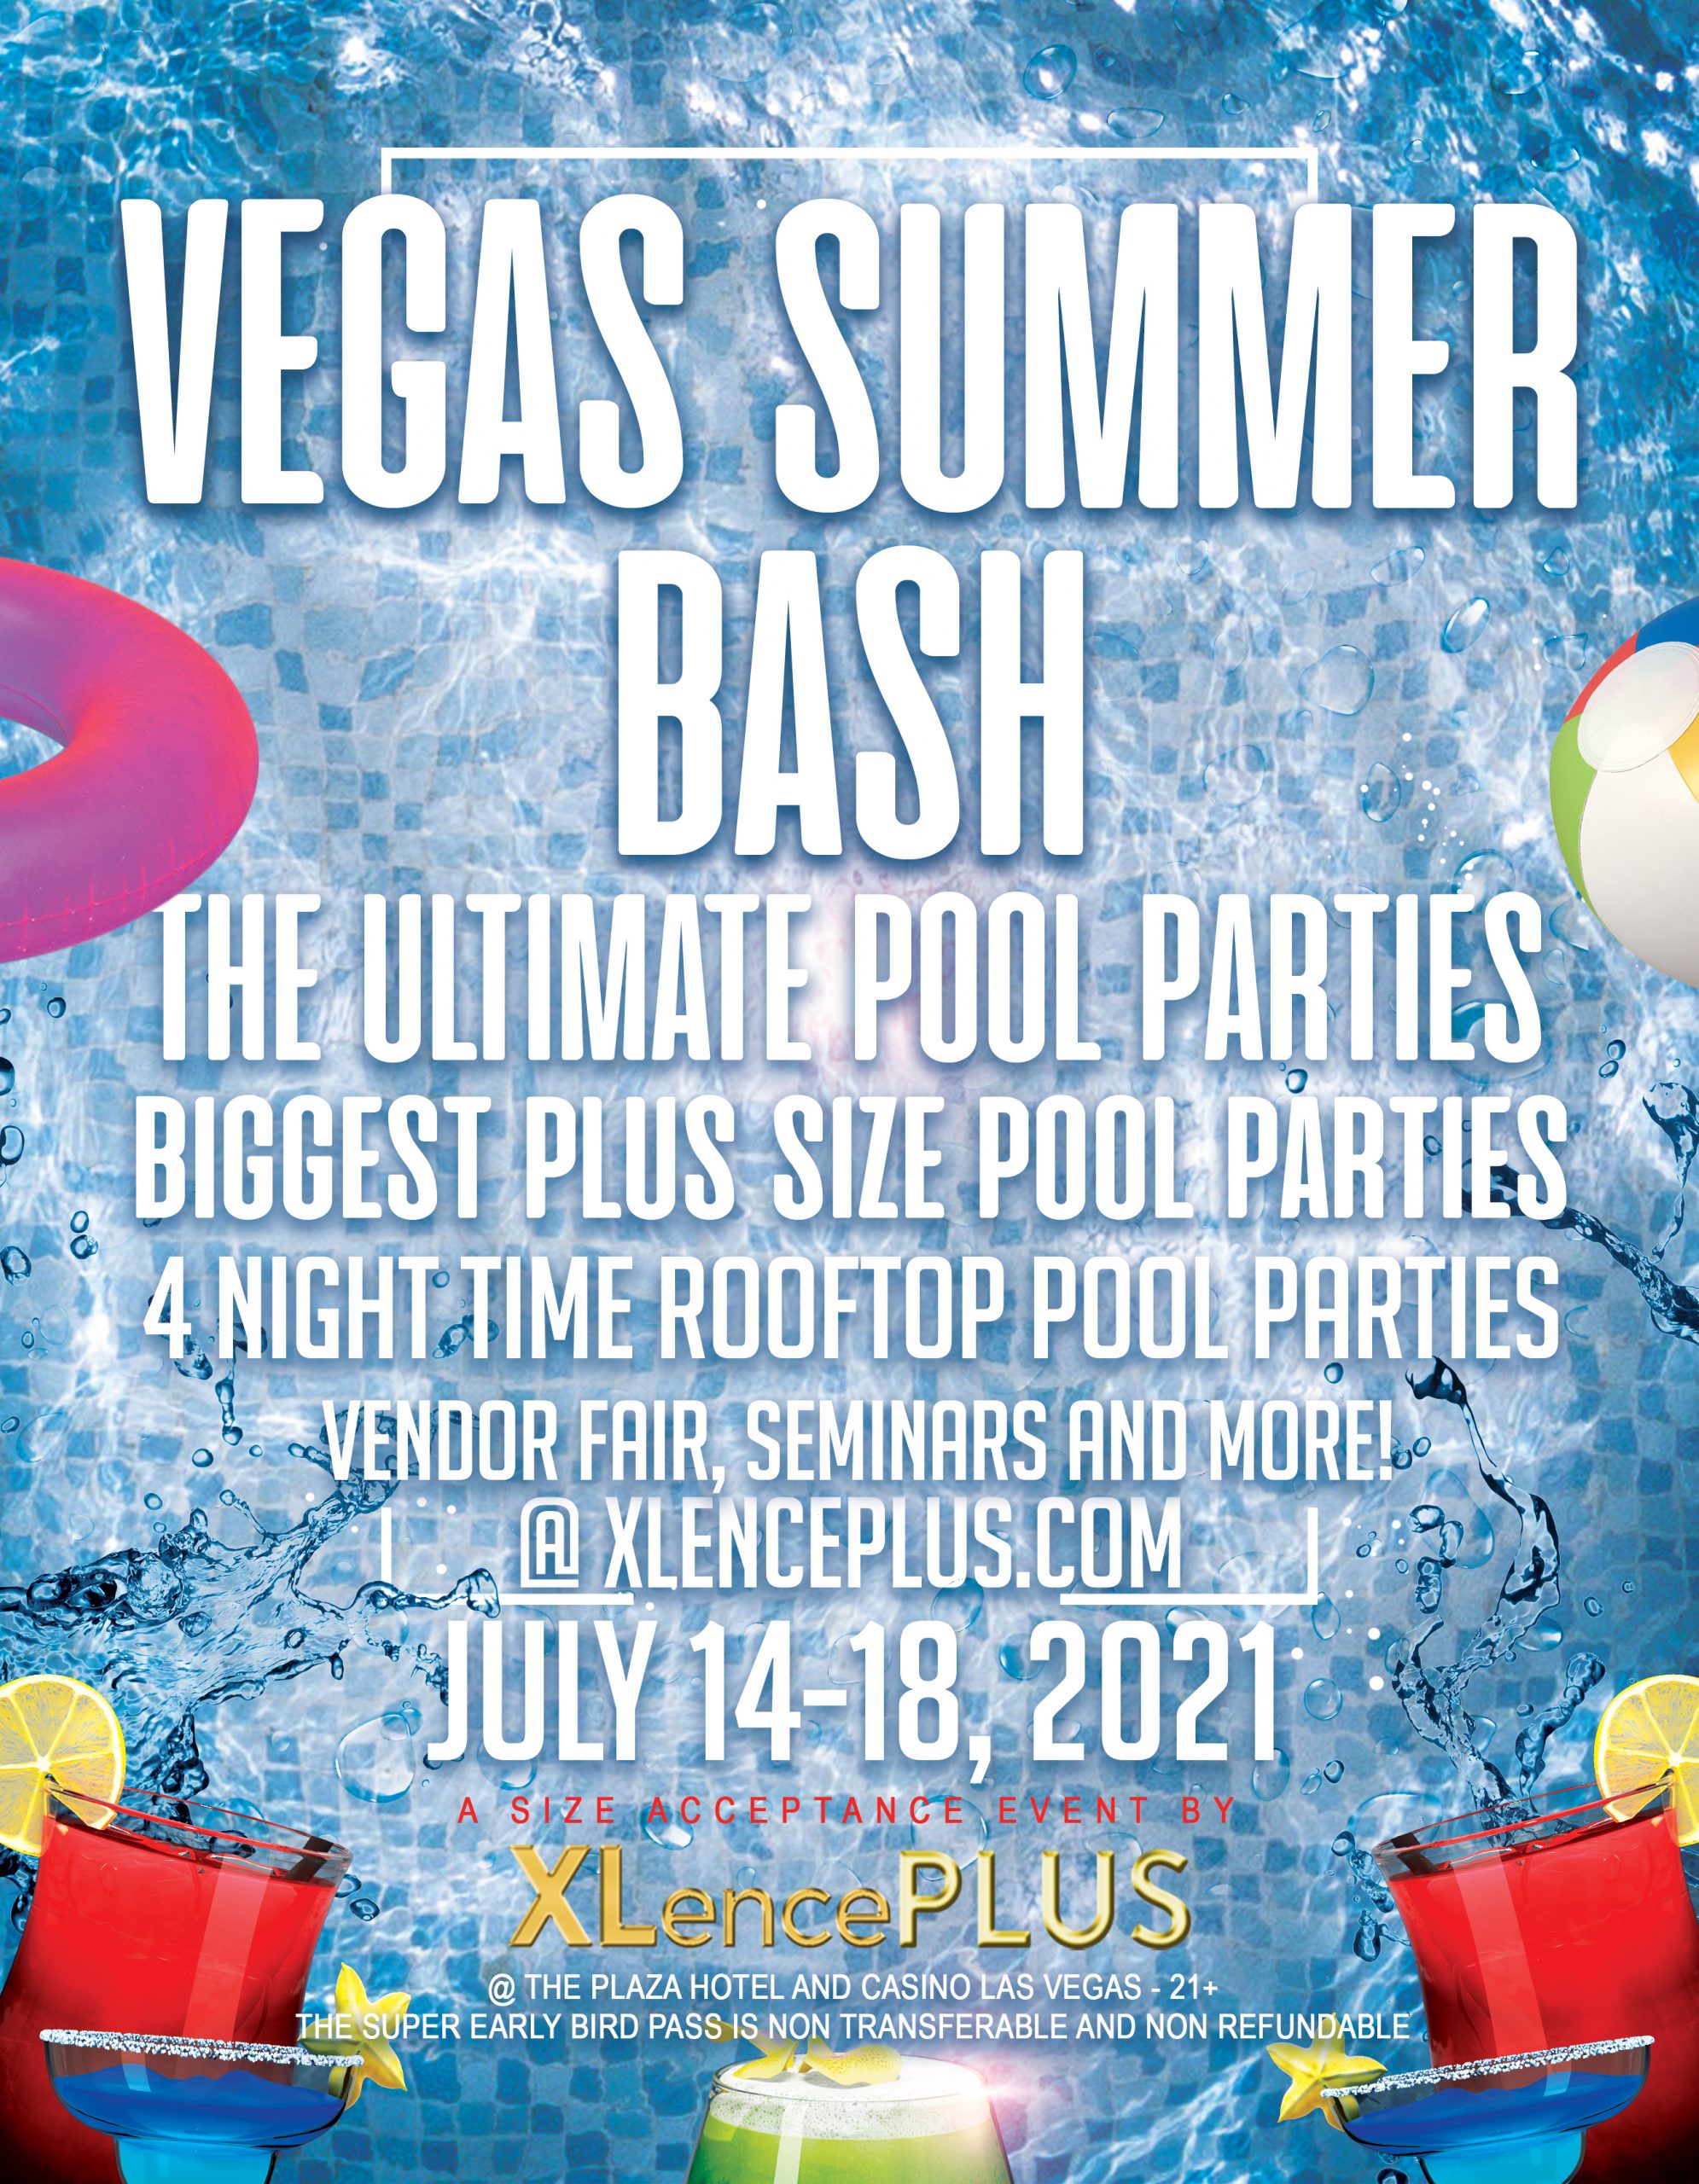 Vegas Summer Bash dates announced! XlencePLUS